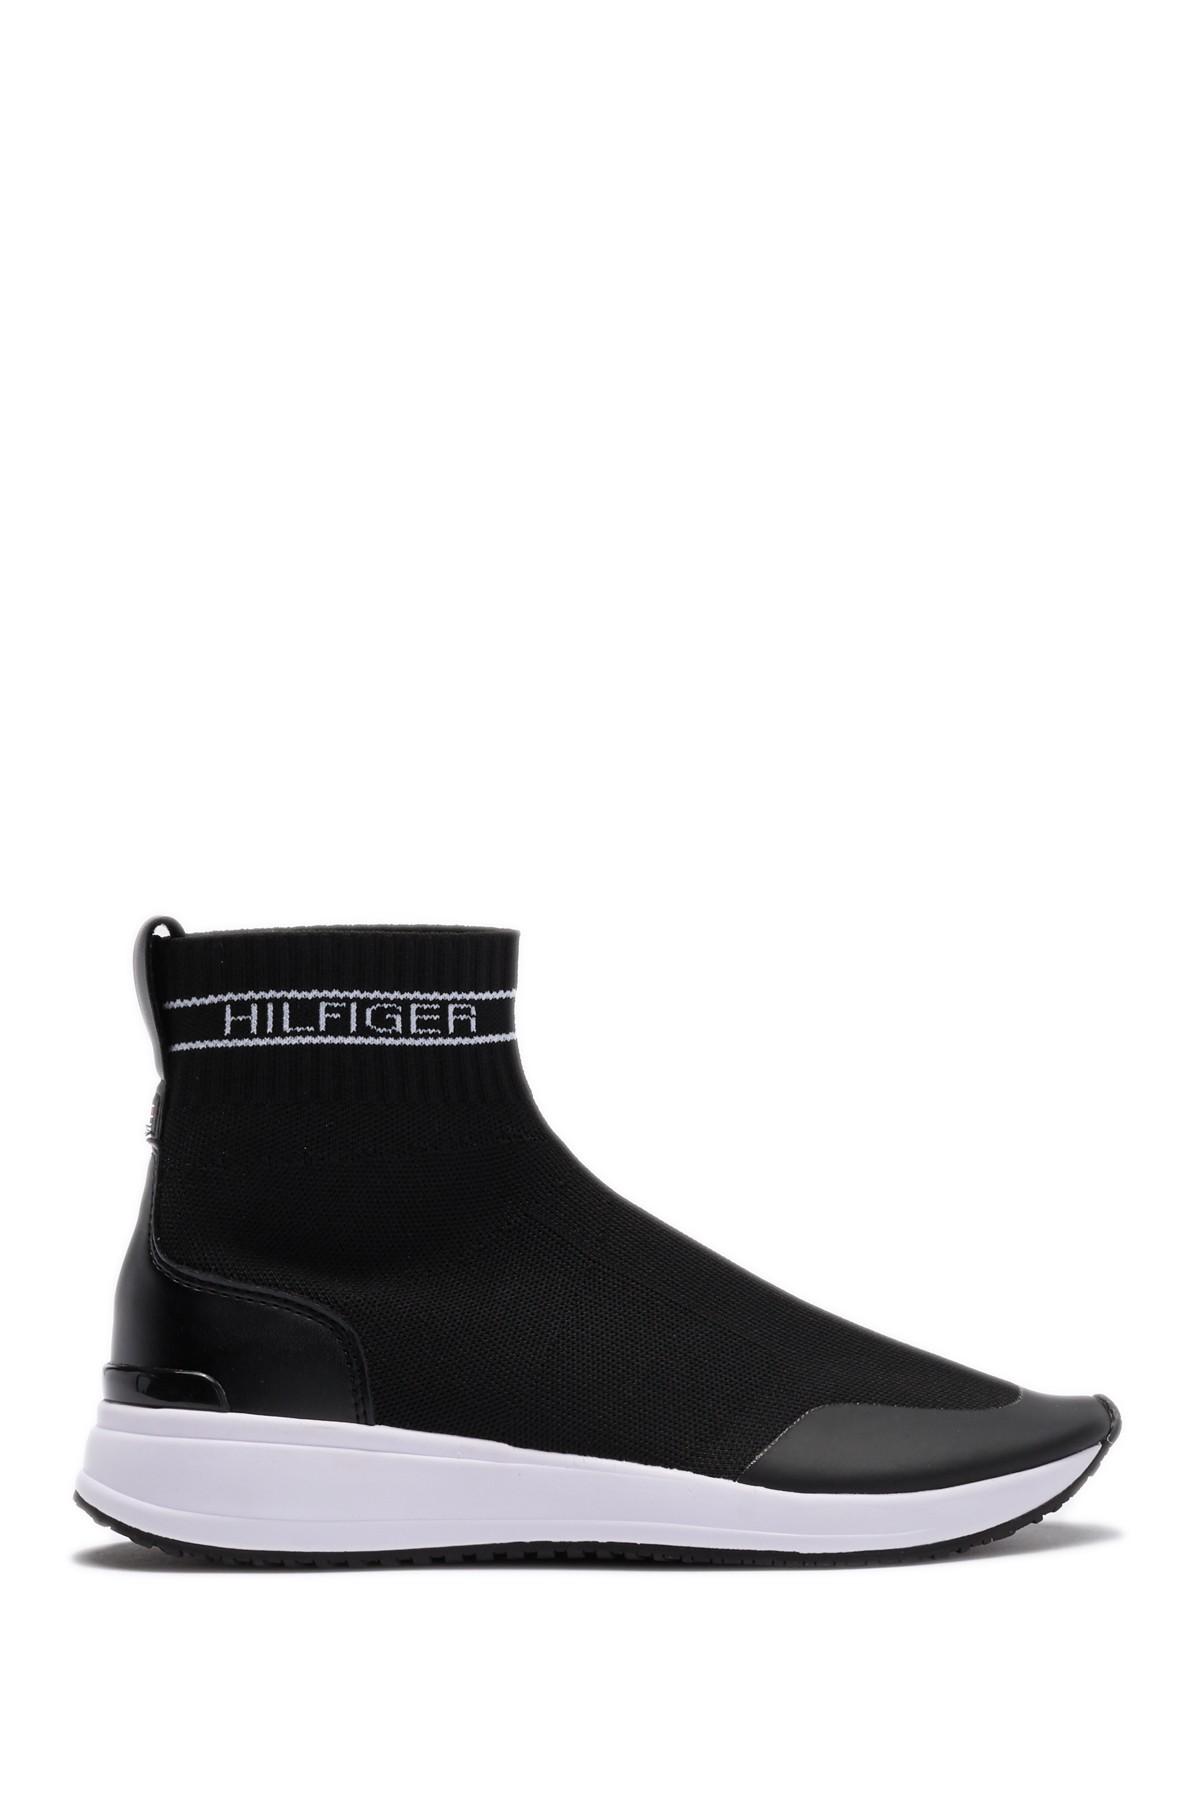 Tommy Hilfiger Reco Sock Sneakers in Black - Lyst